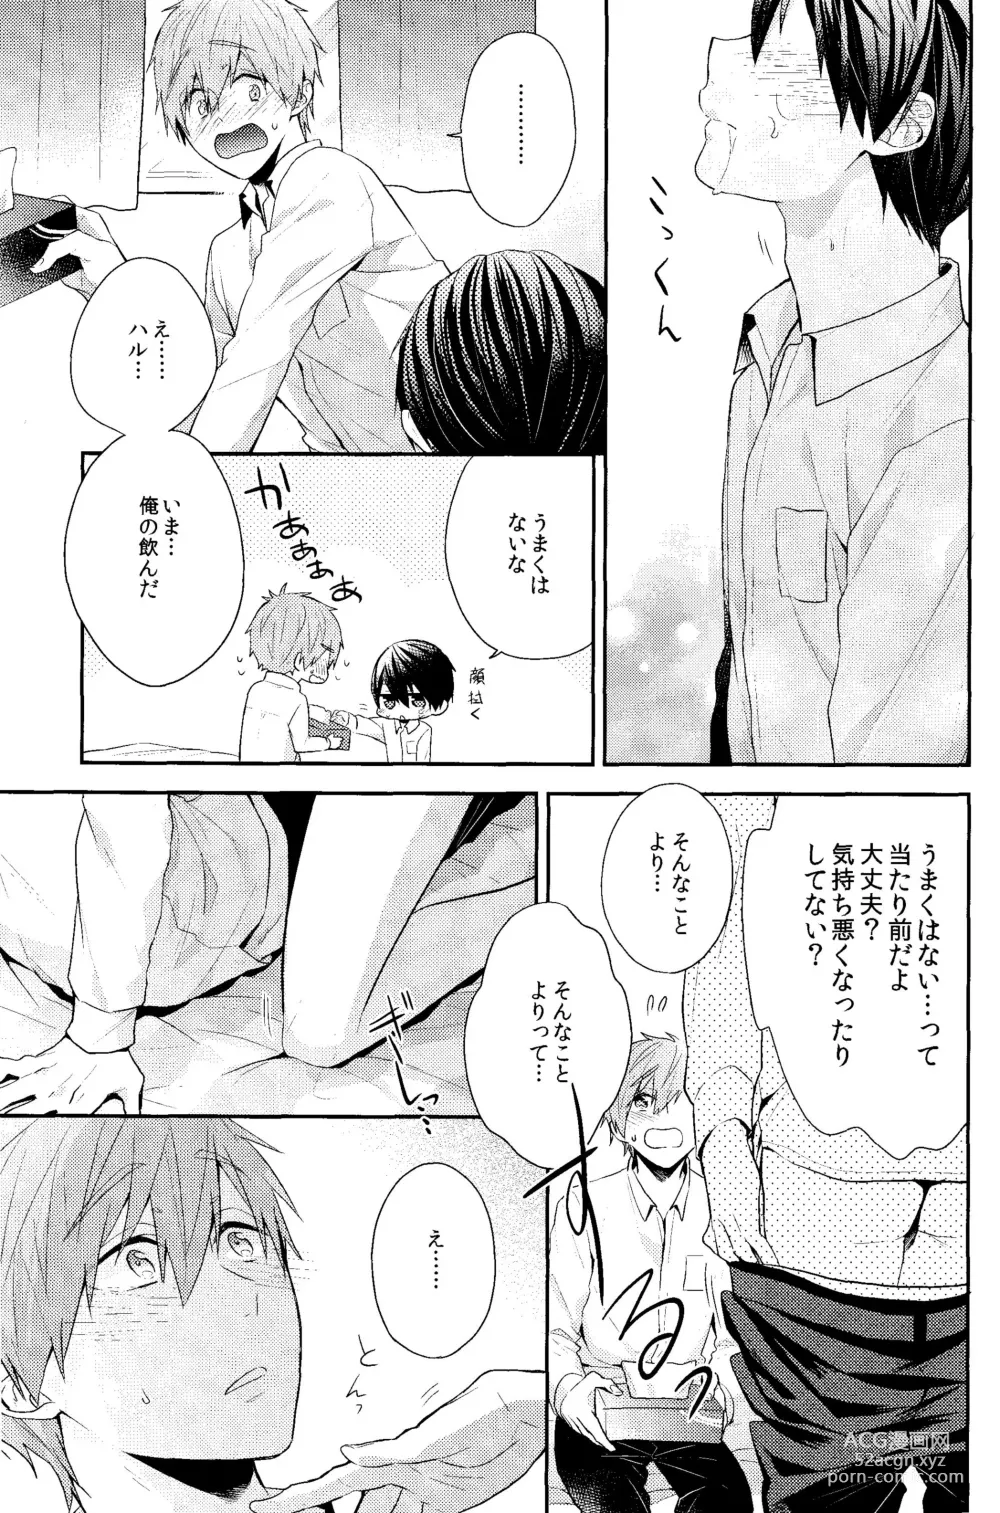 Page 21 of doujinshi Omae wa Nani mo  Shinakute Ii